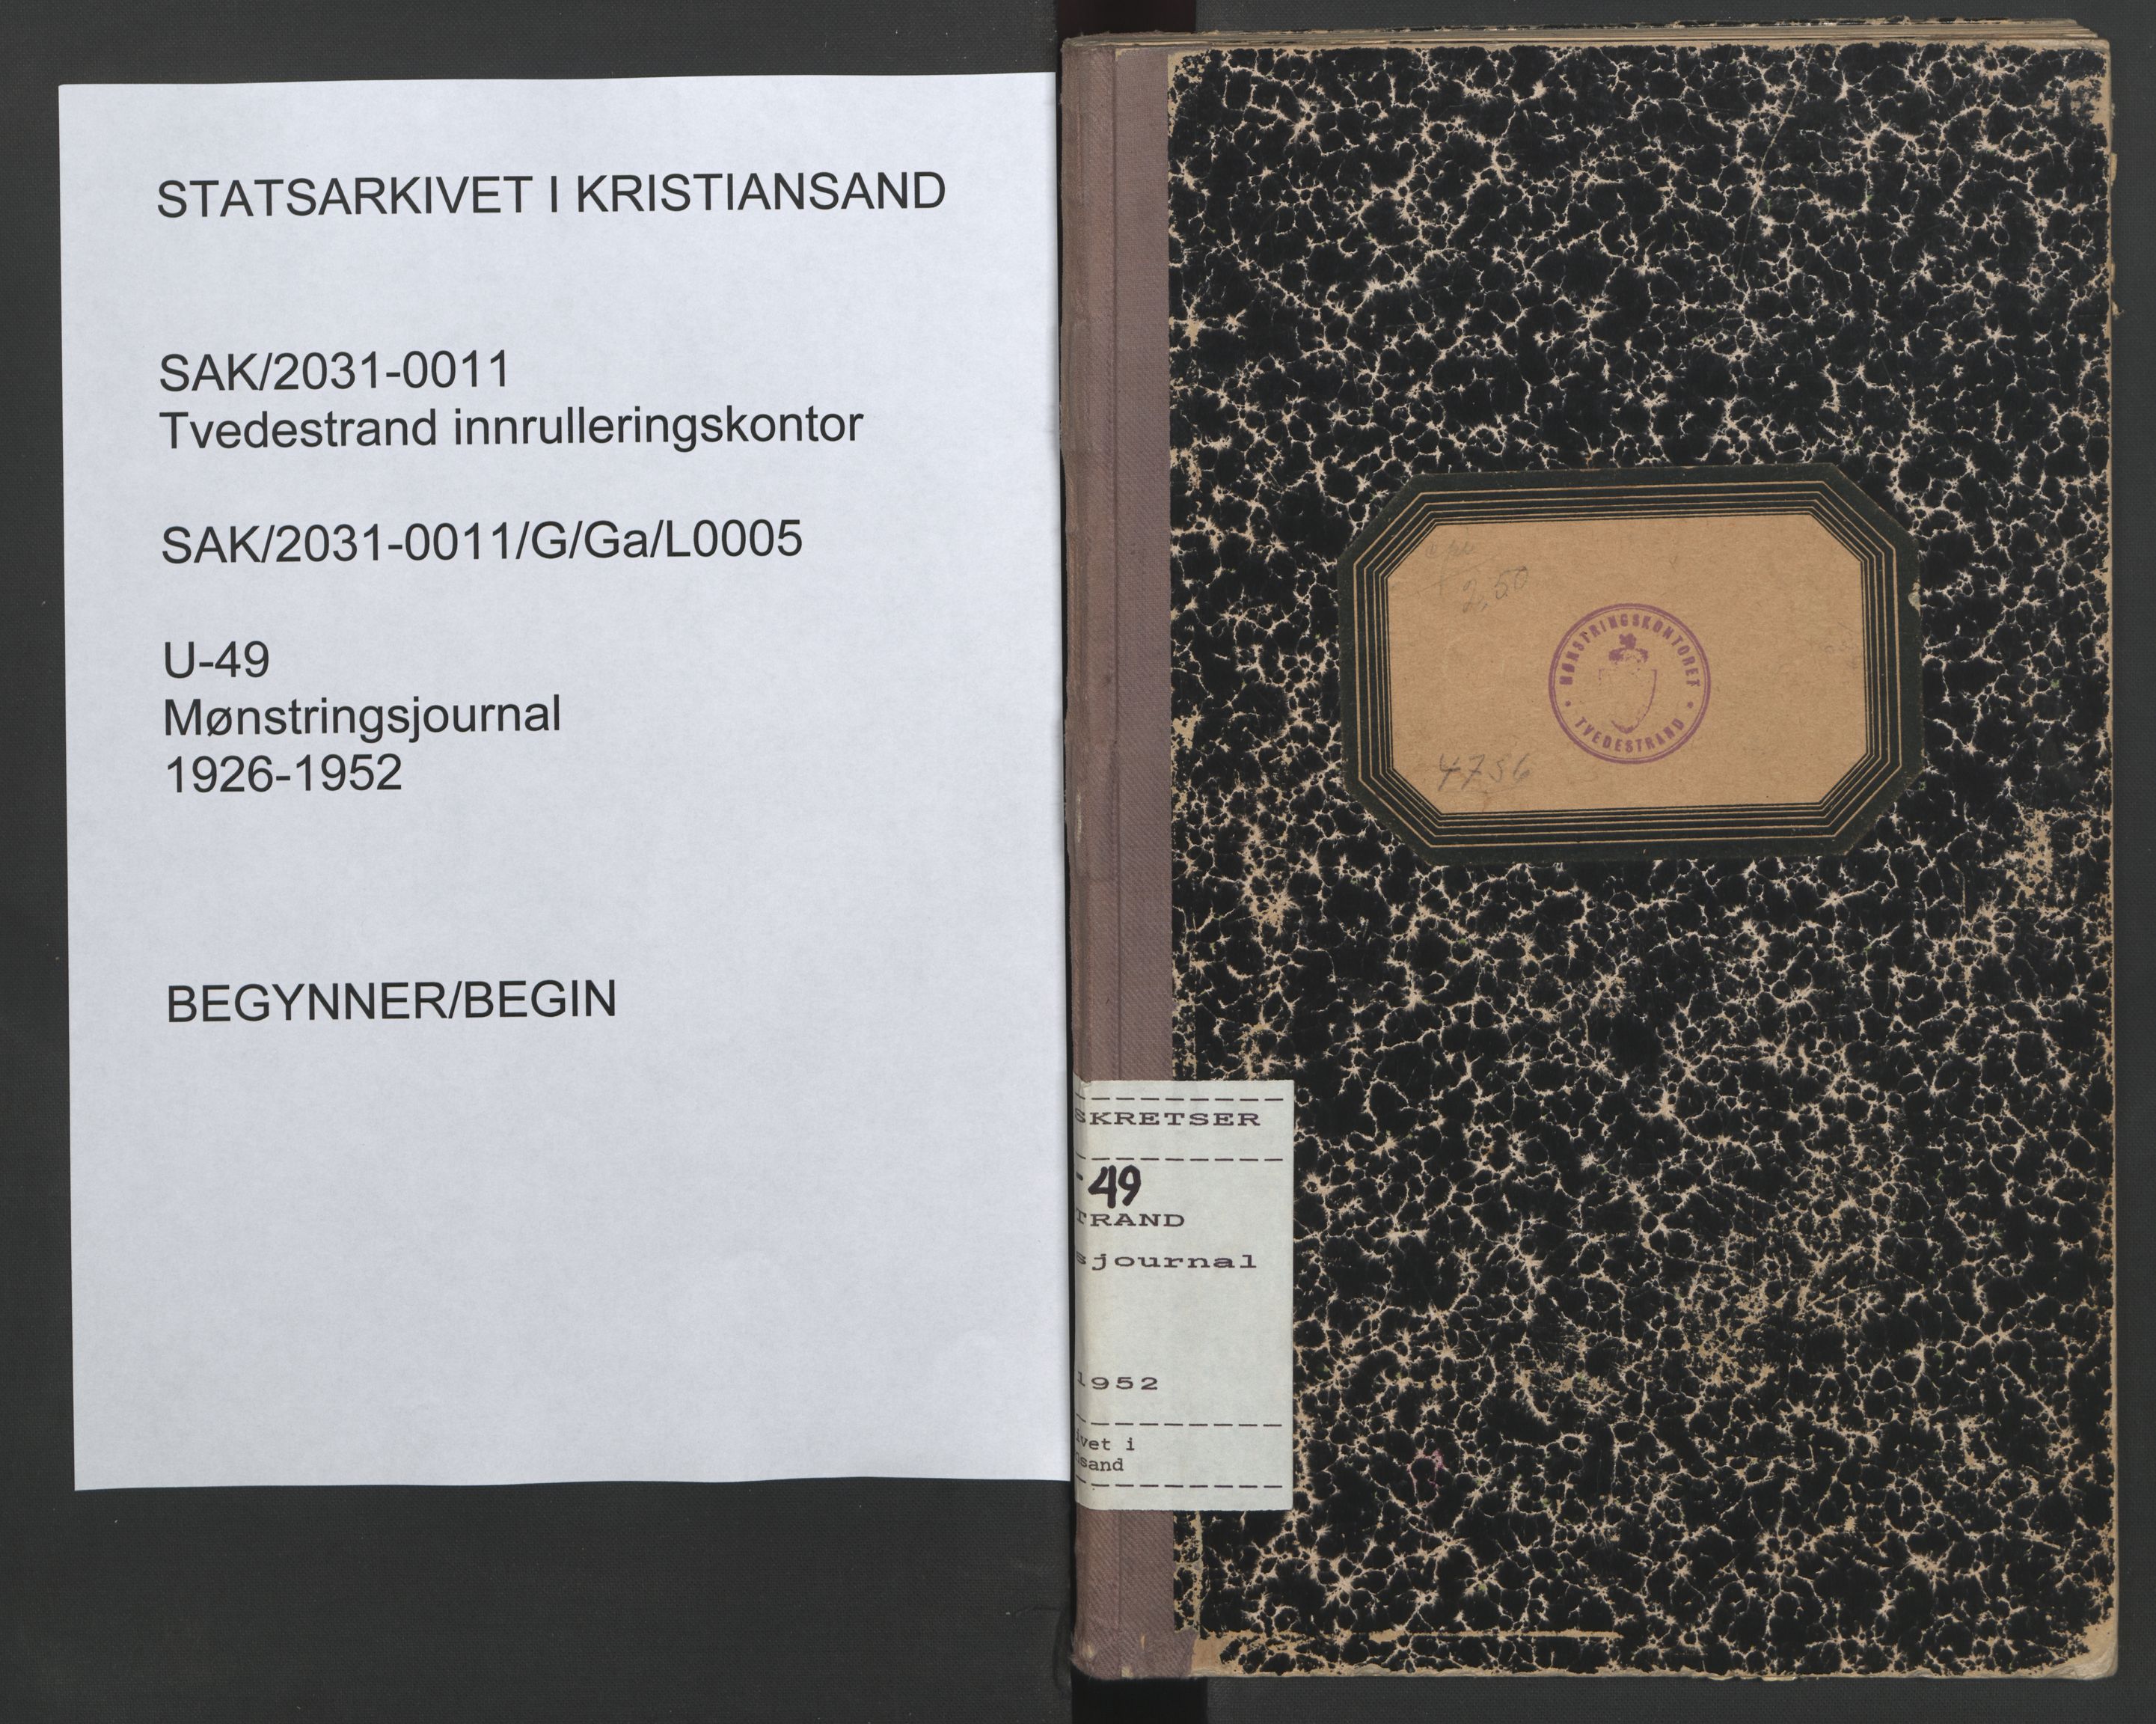 Tvedestrand mønstringskrets, SAK/2031-0011/G/Ga/L0005: Mønstringsjournal, U-49, 1926-1952, p. 1